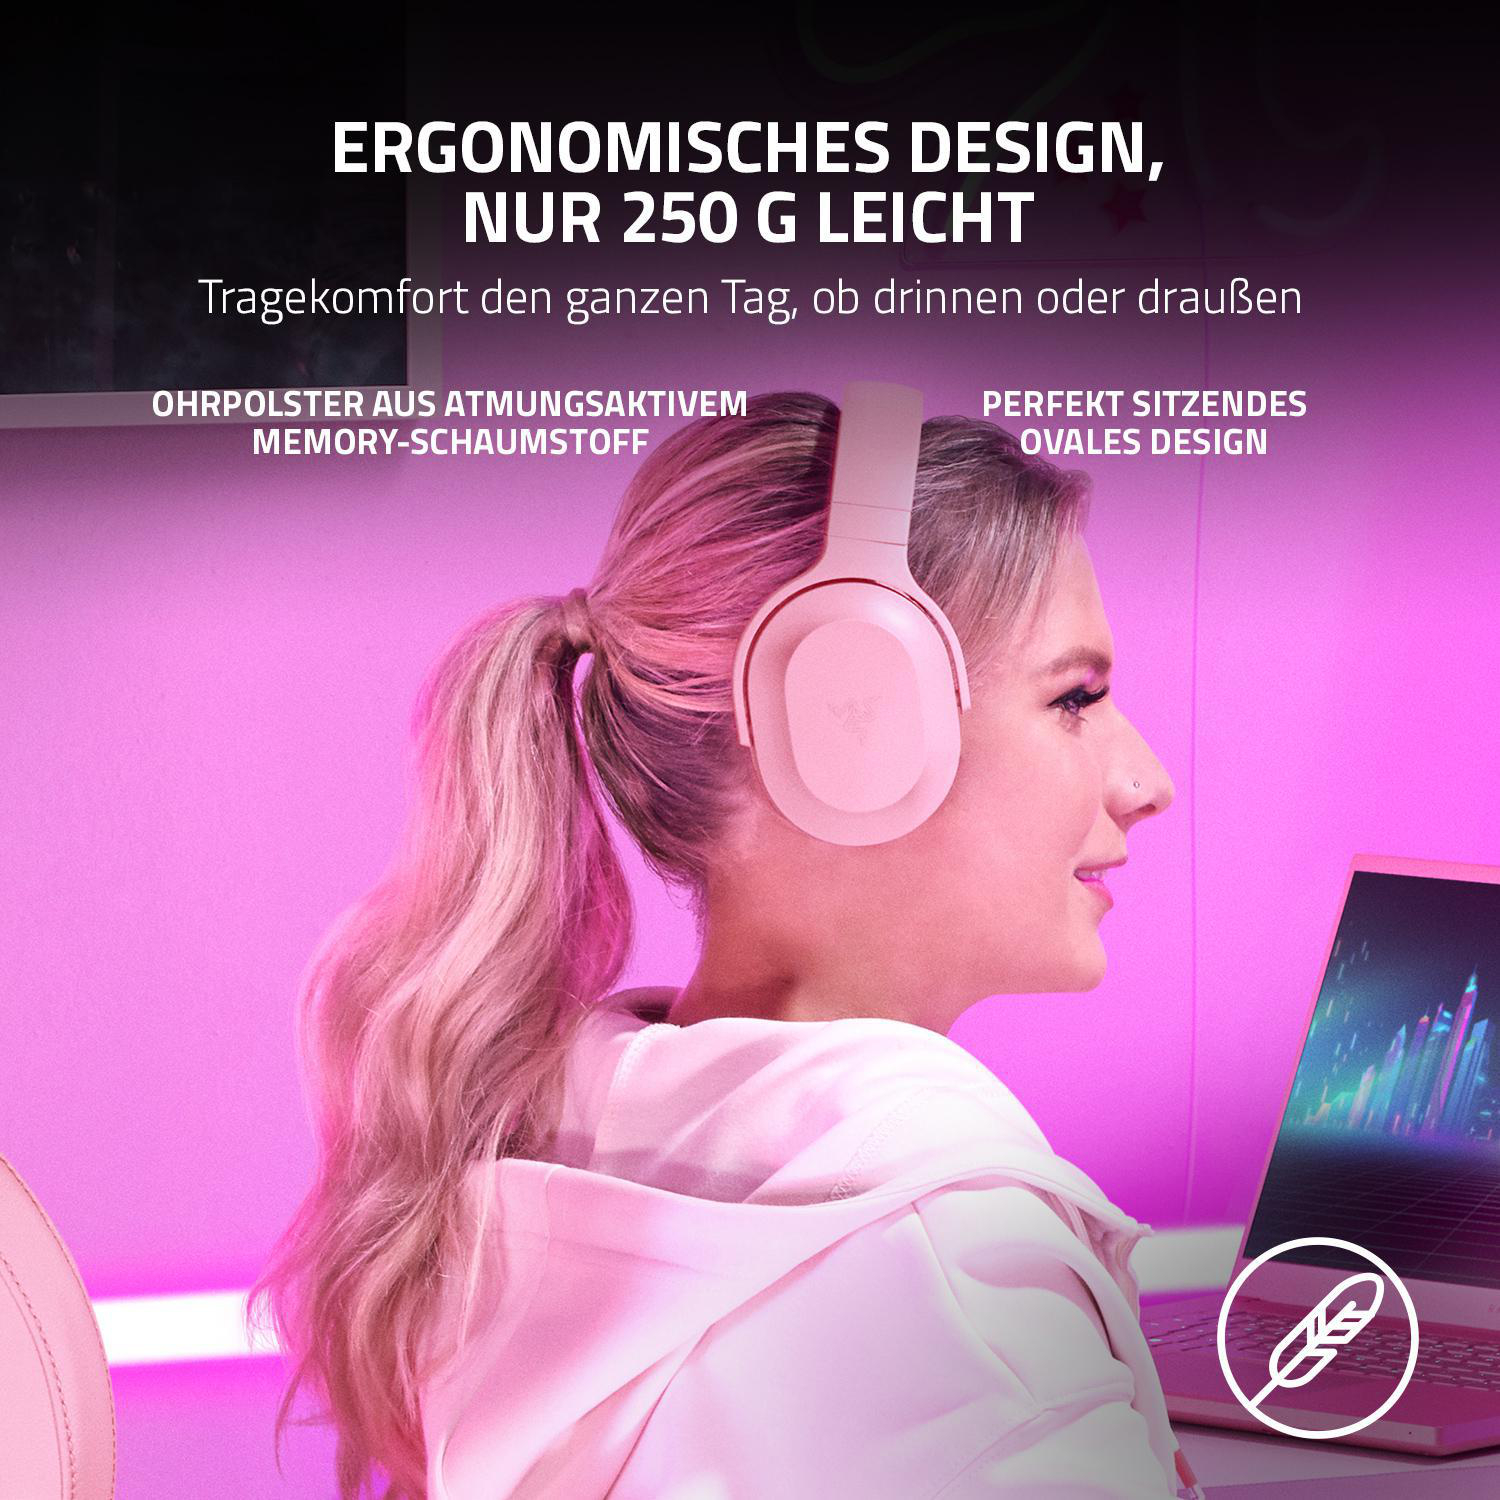 RAZER Barracuda X, Bluetooth Quartz Headset Pink Gaming Over-ear